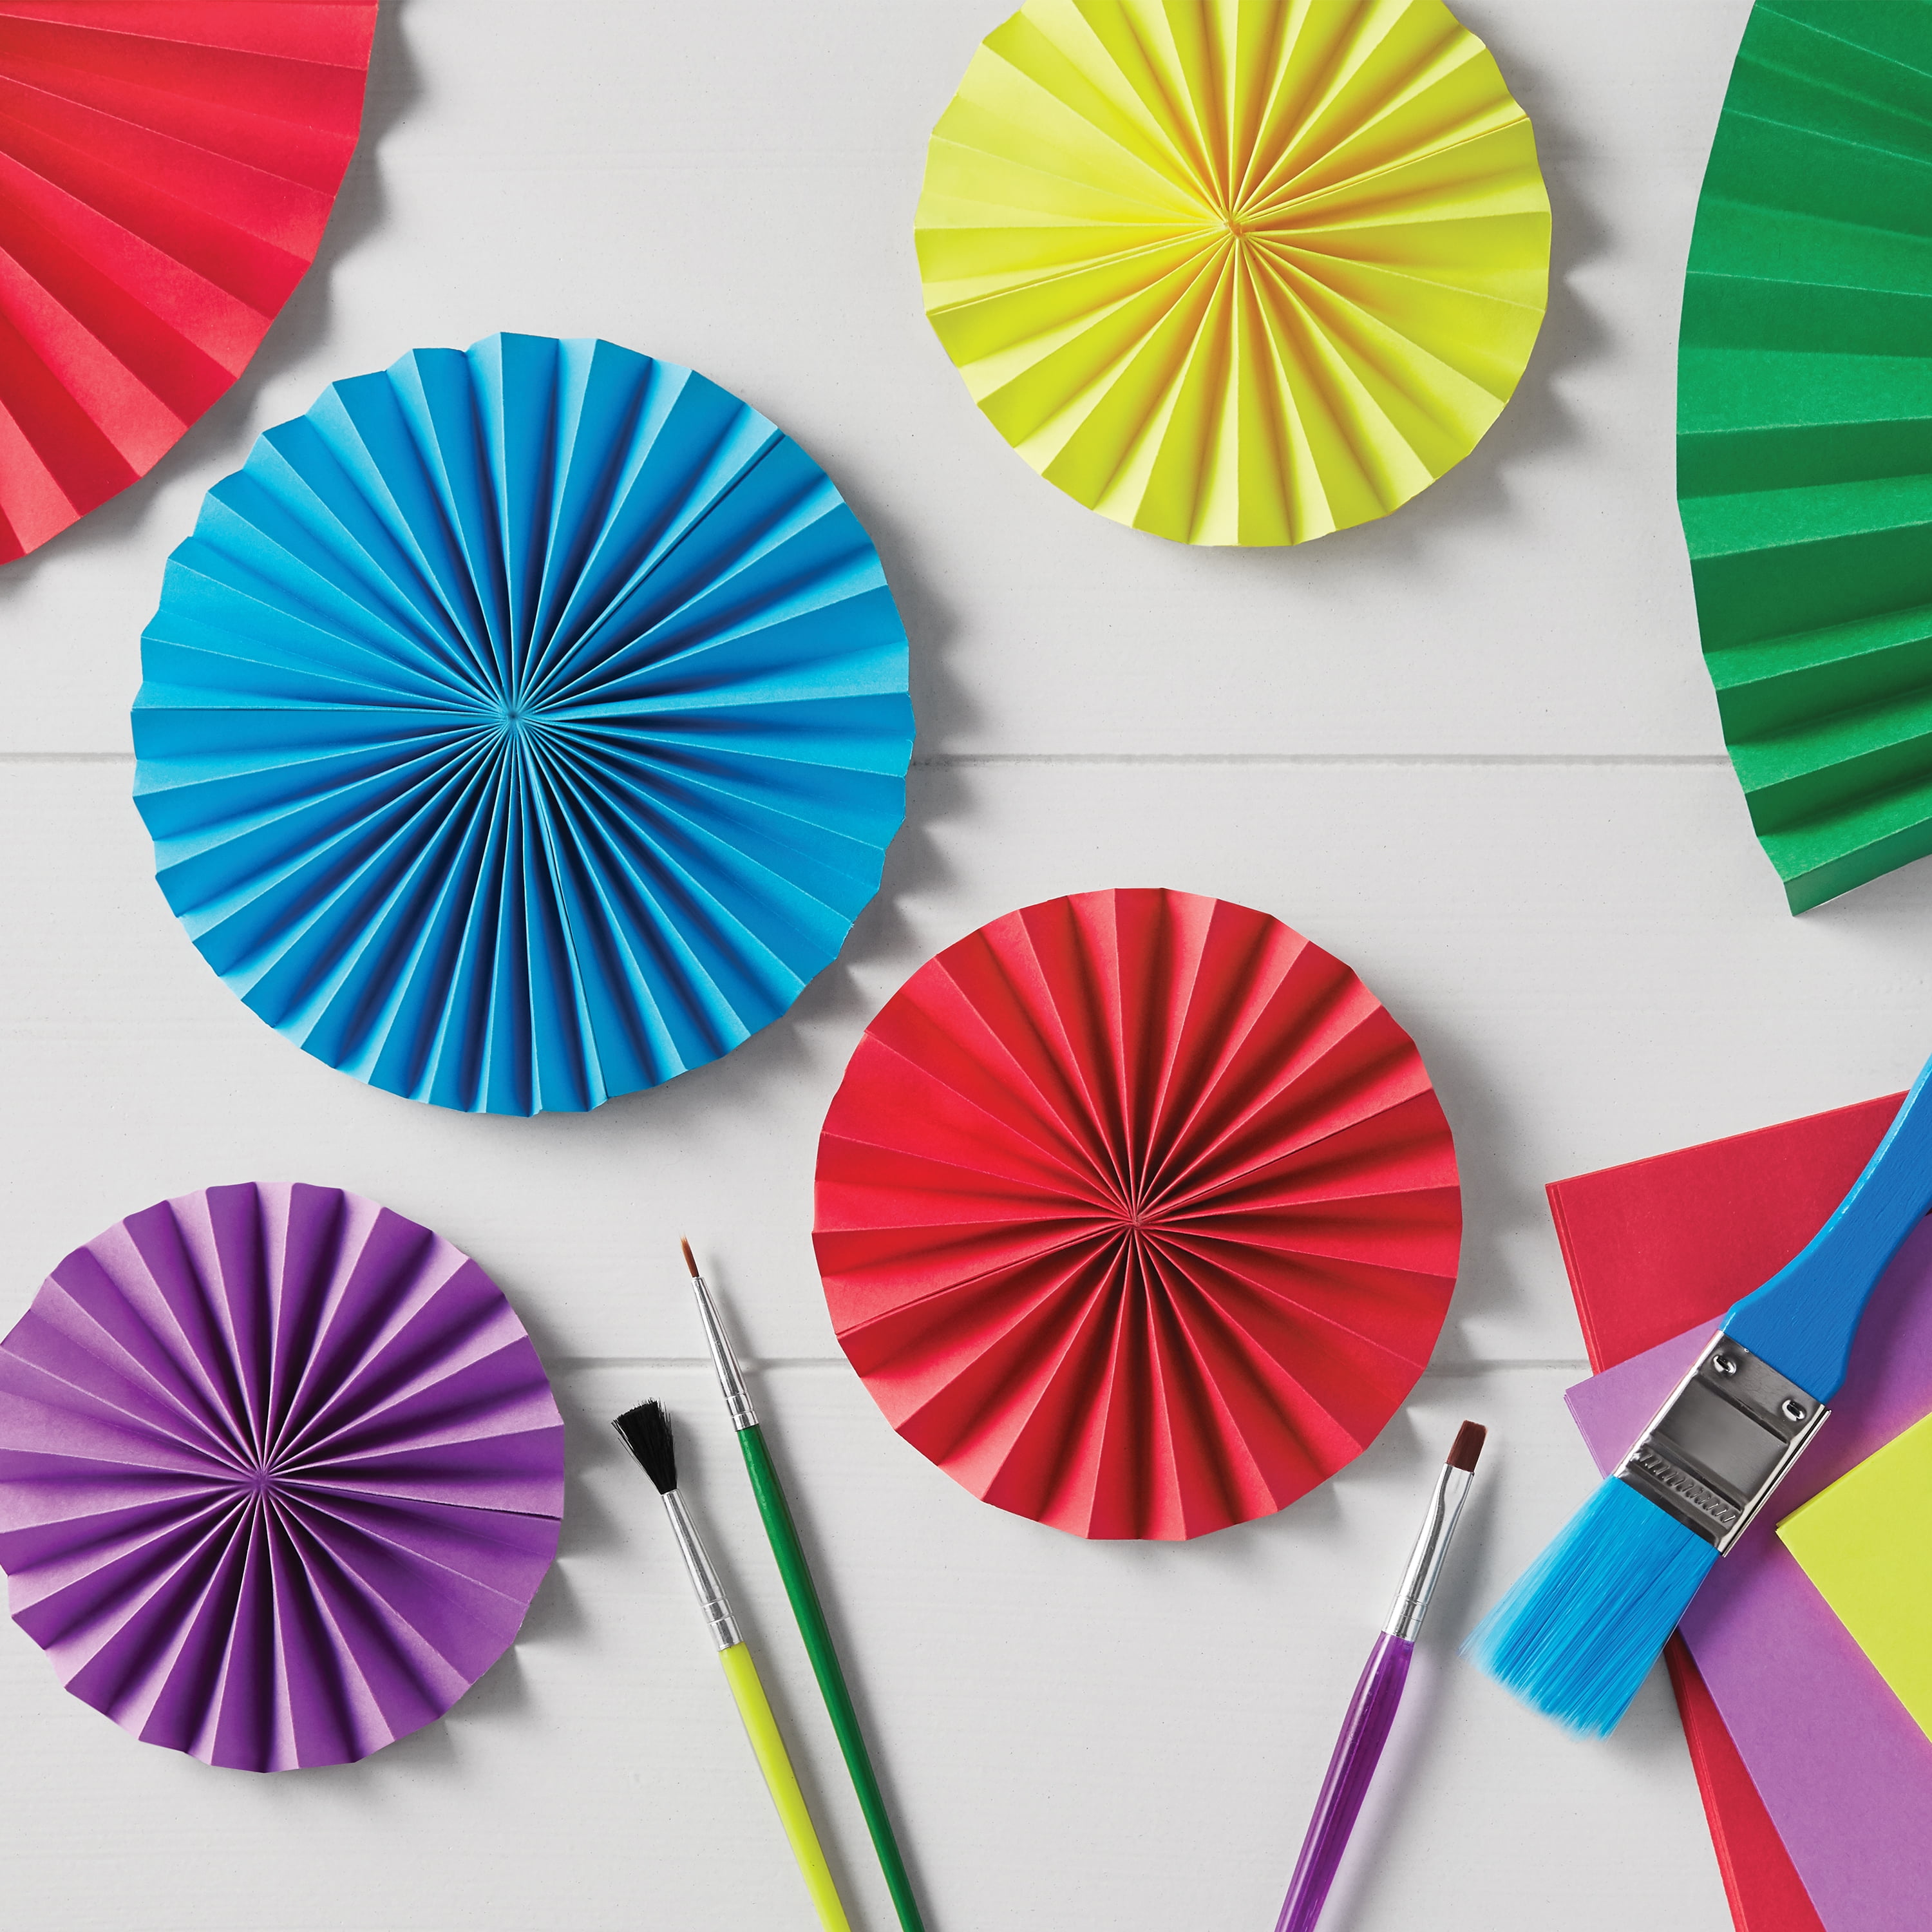 Pen + Gear Color Copy Paper, Assorted Ultra-Bright Neon, 8.5 x 11, 24 lb, 800 Sheets, Size: 800 Sheets